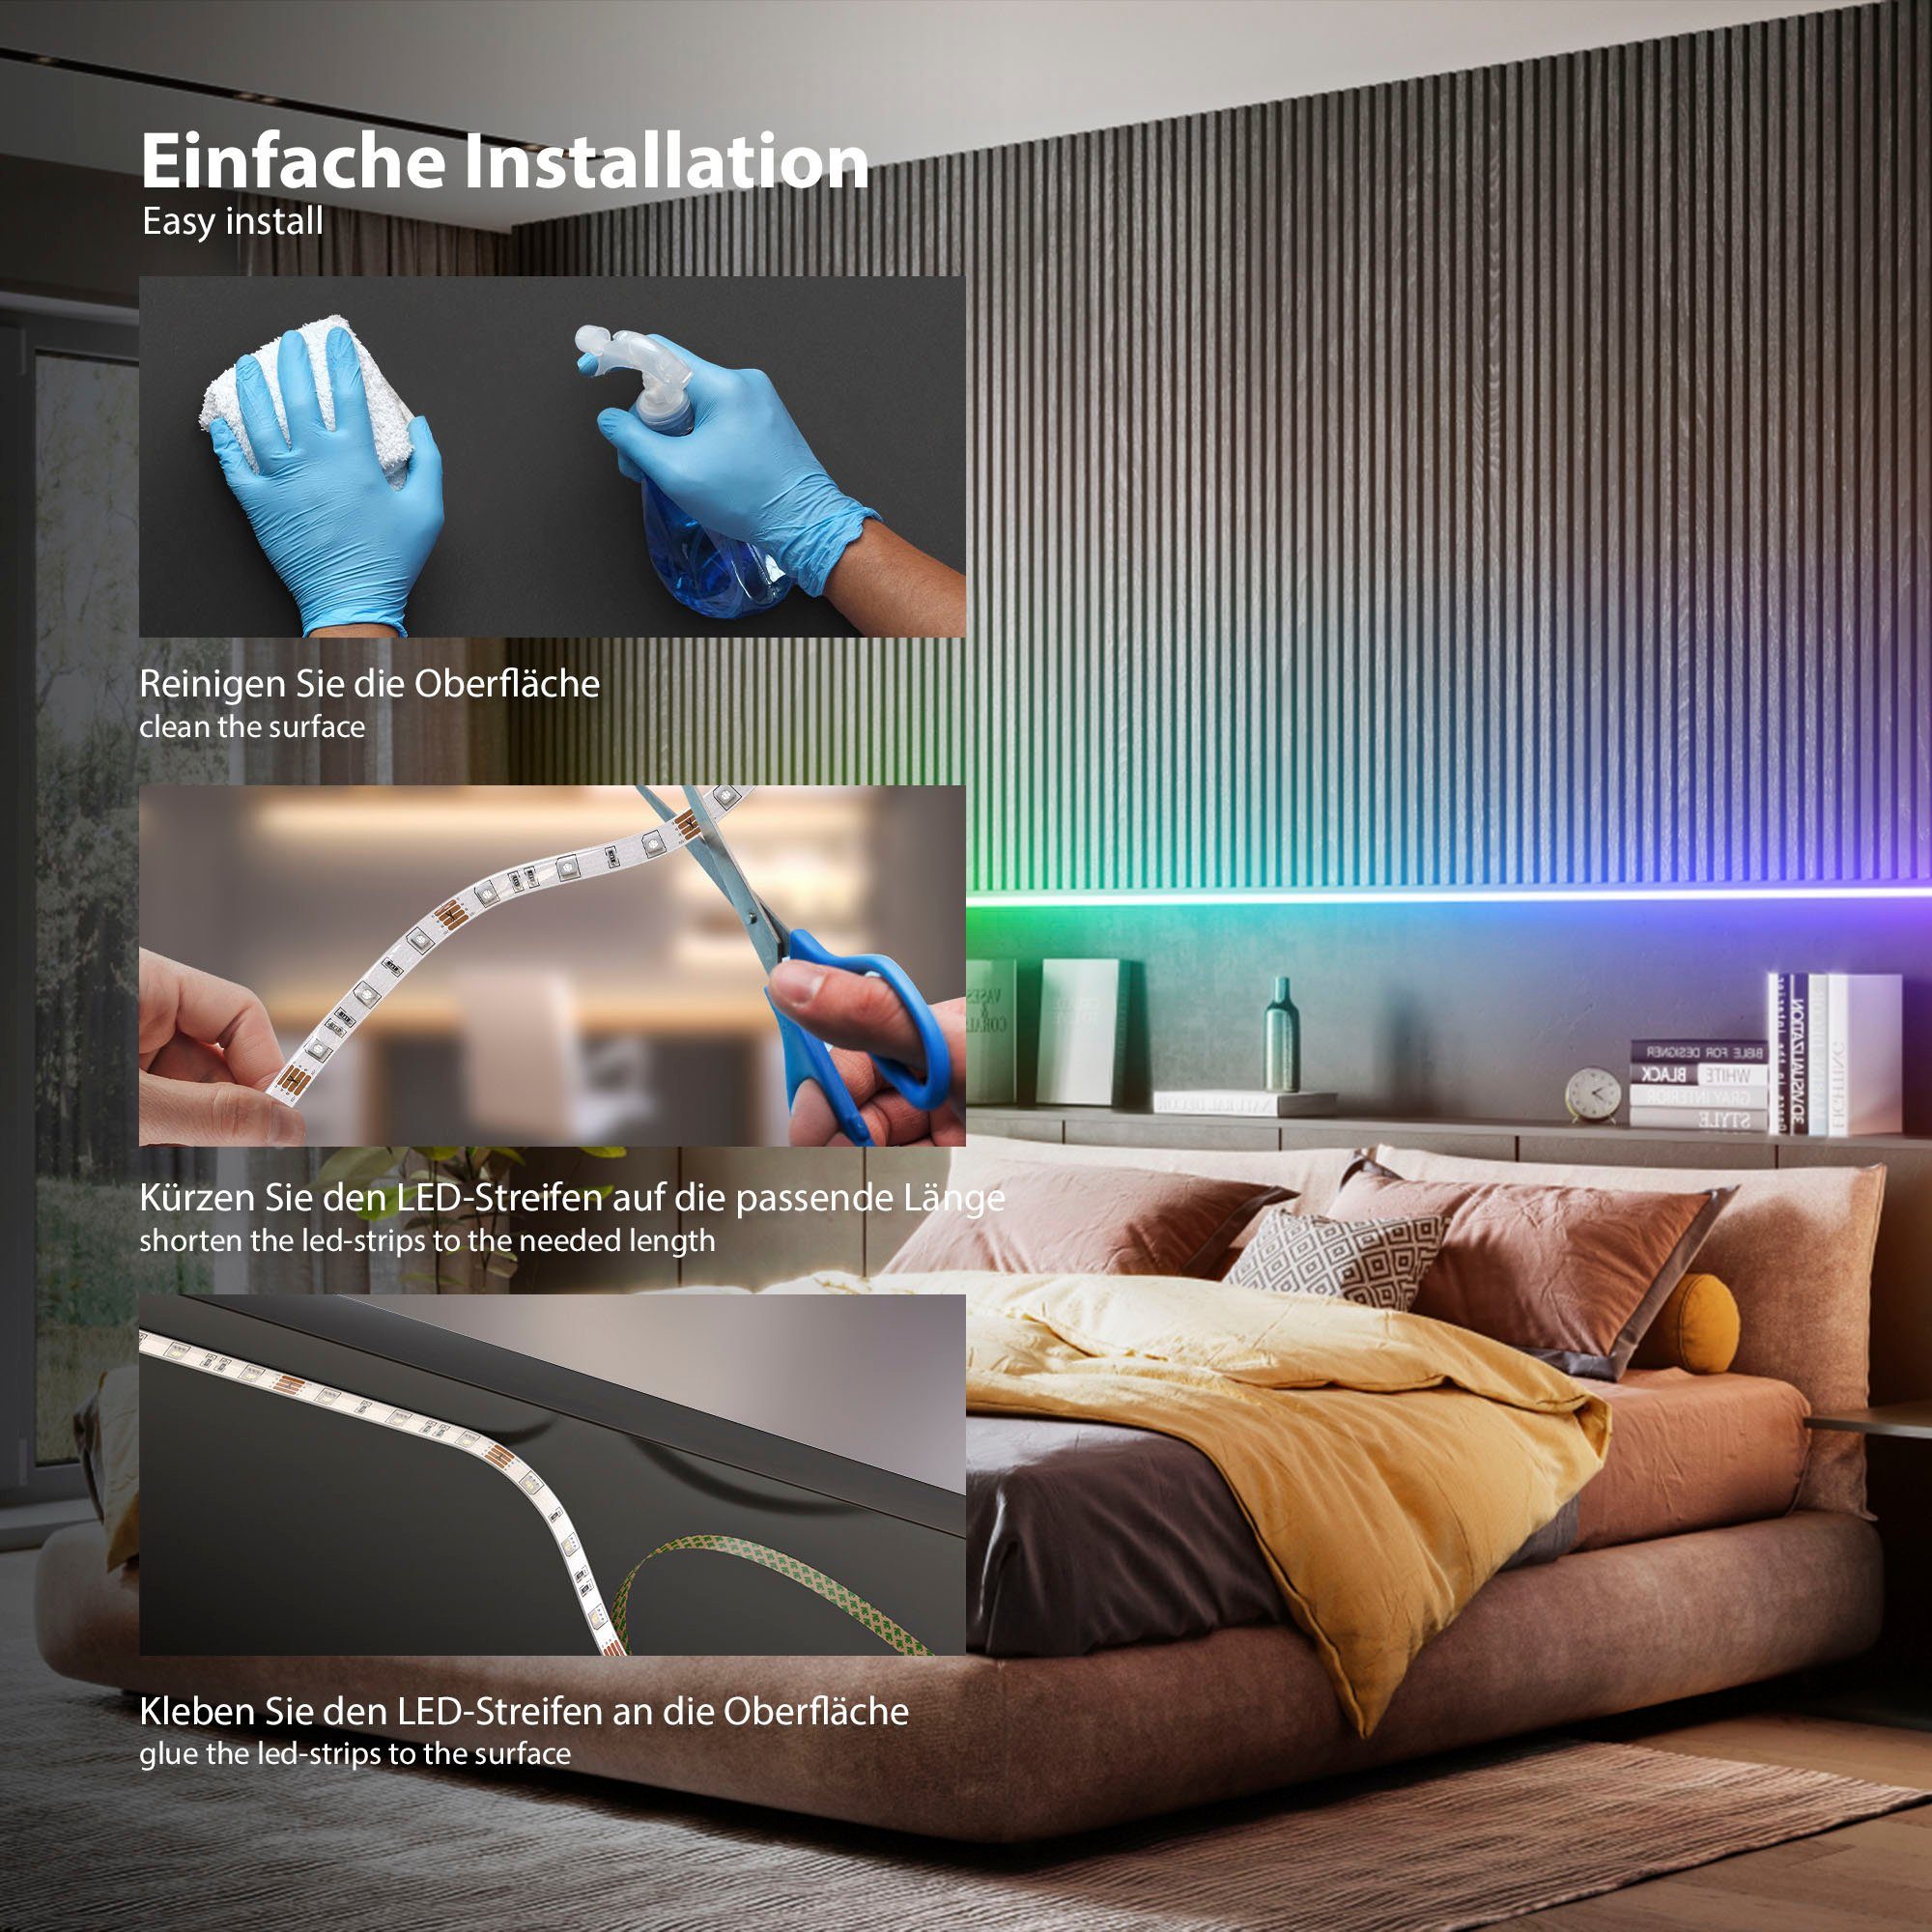 Wifi RGBIC, LED mit LED-Streifen Band, Lichtleiste, smartes Musiksensor, 150-flammig, B.K.Licht Selbstklebend